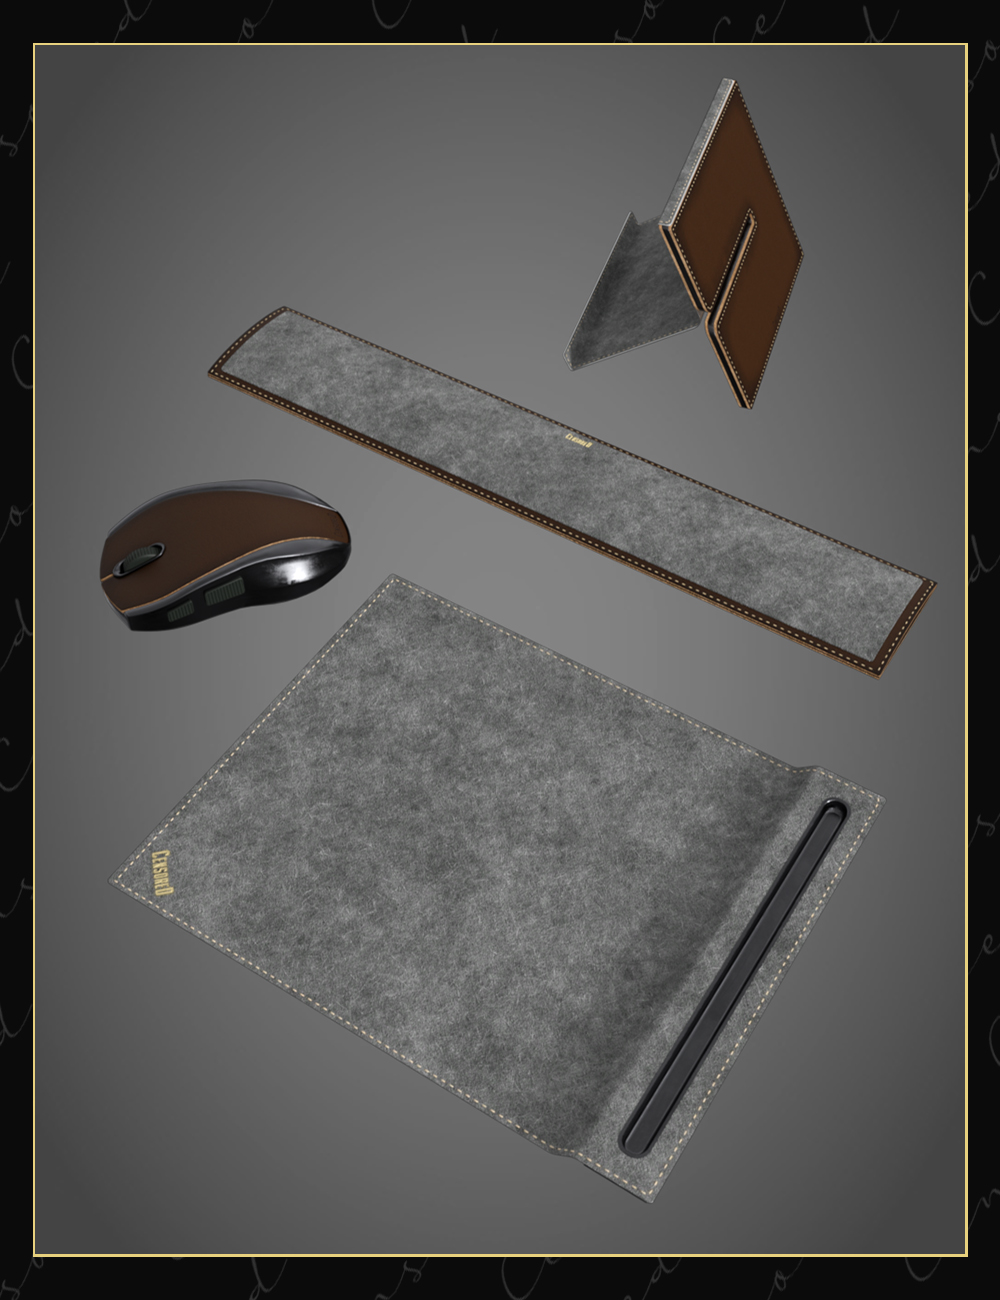 Luxury Office Desk Supplies by: Censored, 3D Models by Daz 3D